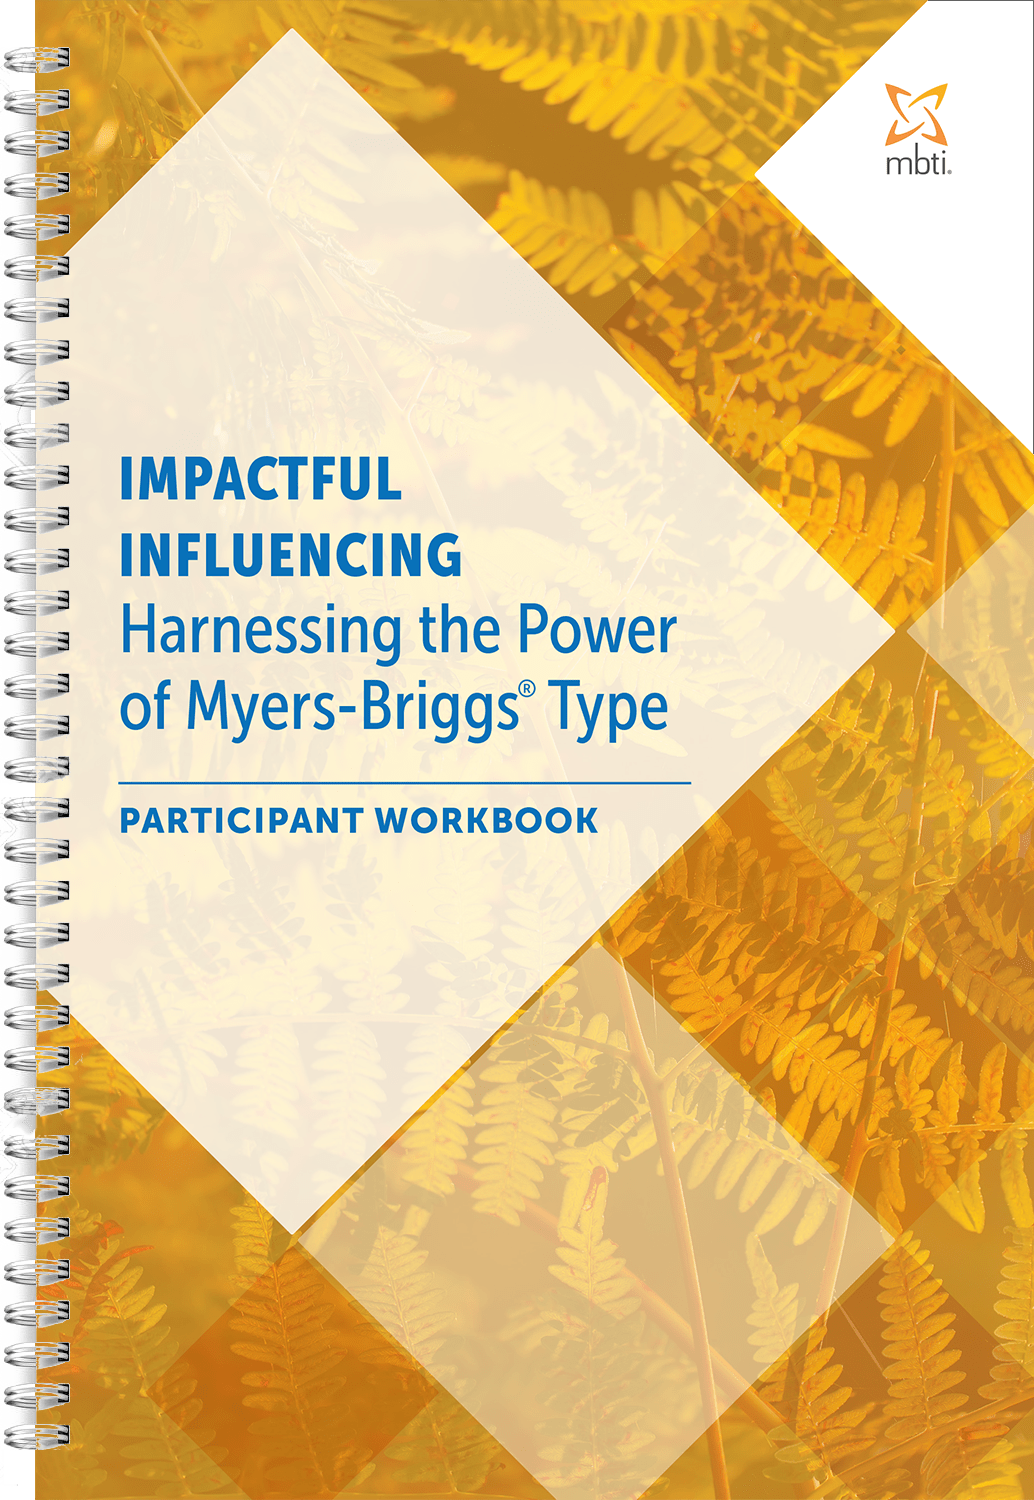 Impactful Influencing Participant Workbook - 10 pack